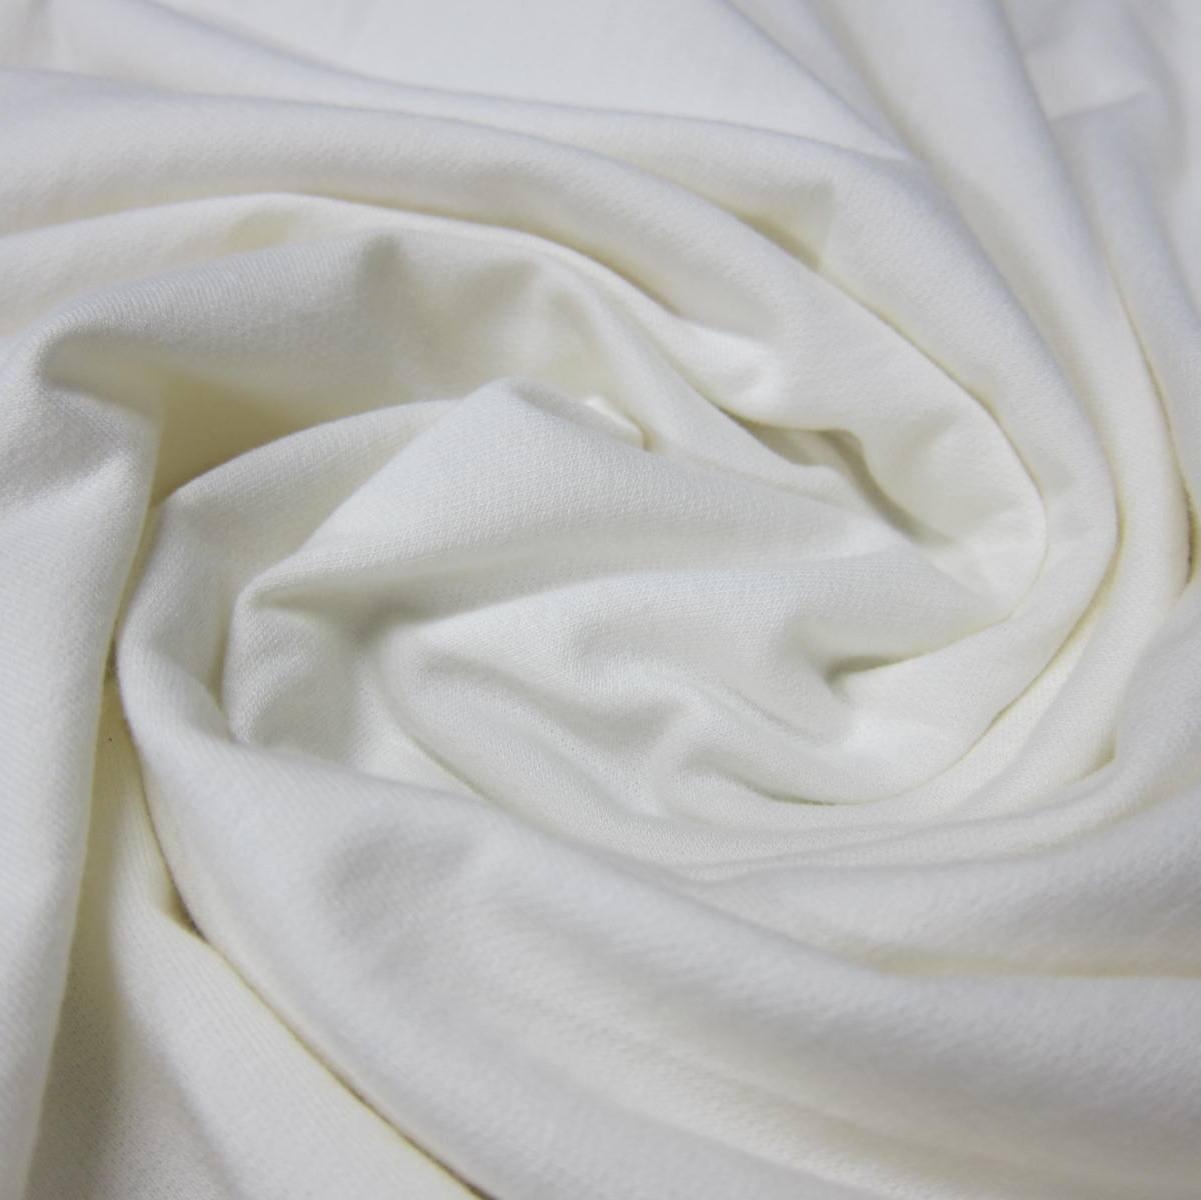 Bamboo Fleece Fabric - 200 GSM, $8.52/yd - Rolls - Nature's Fabrics